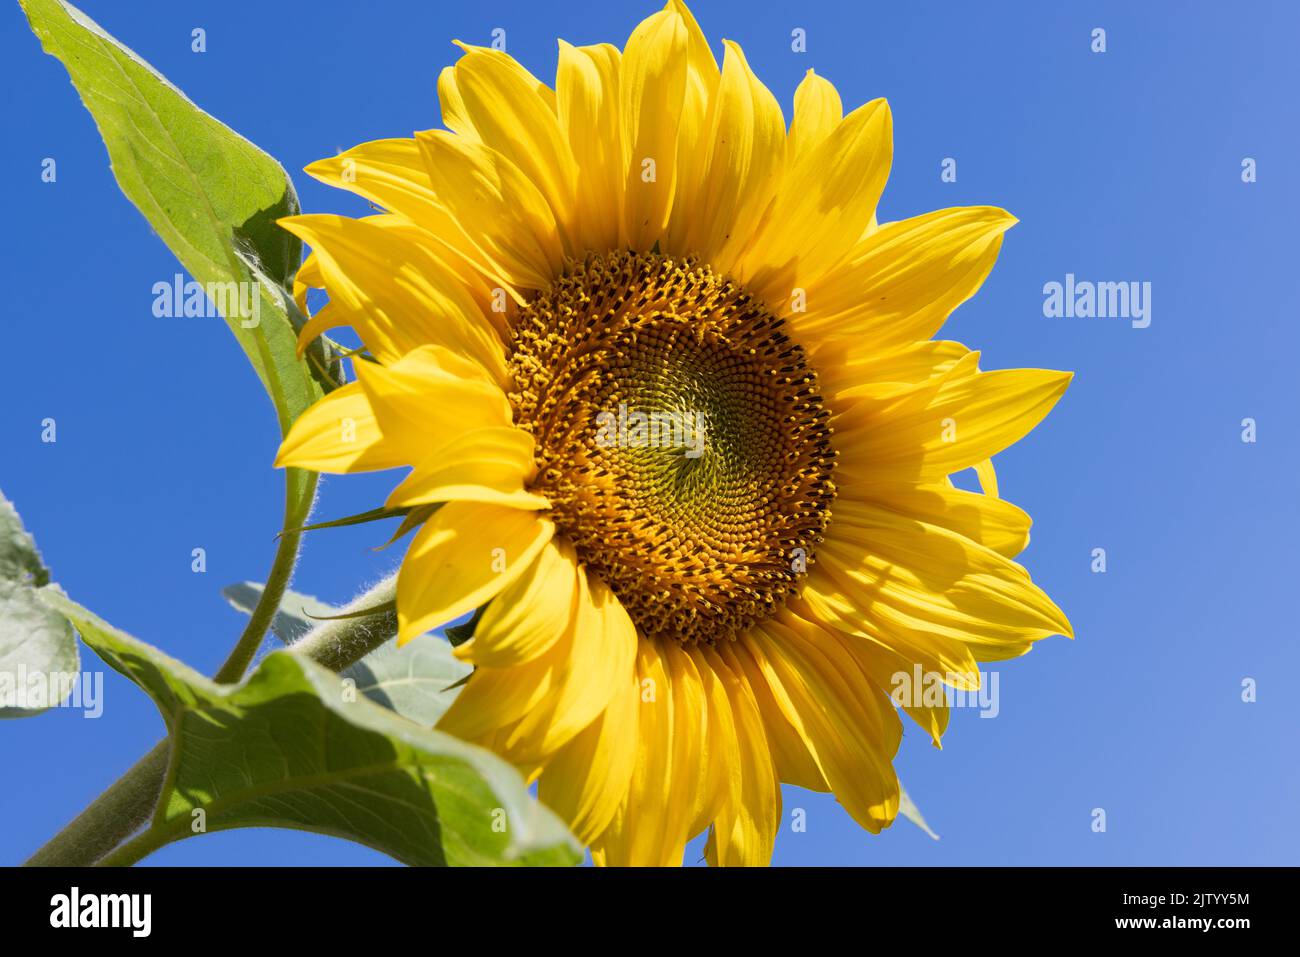 Sunflower against a bright blue sky Stock Photo